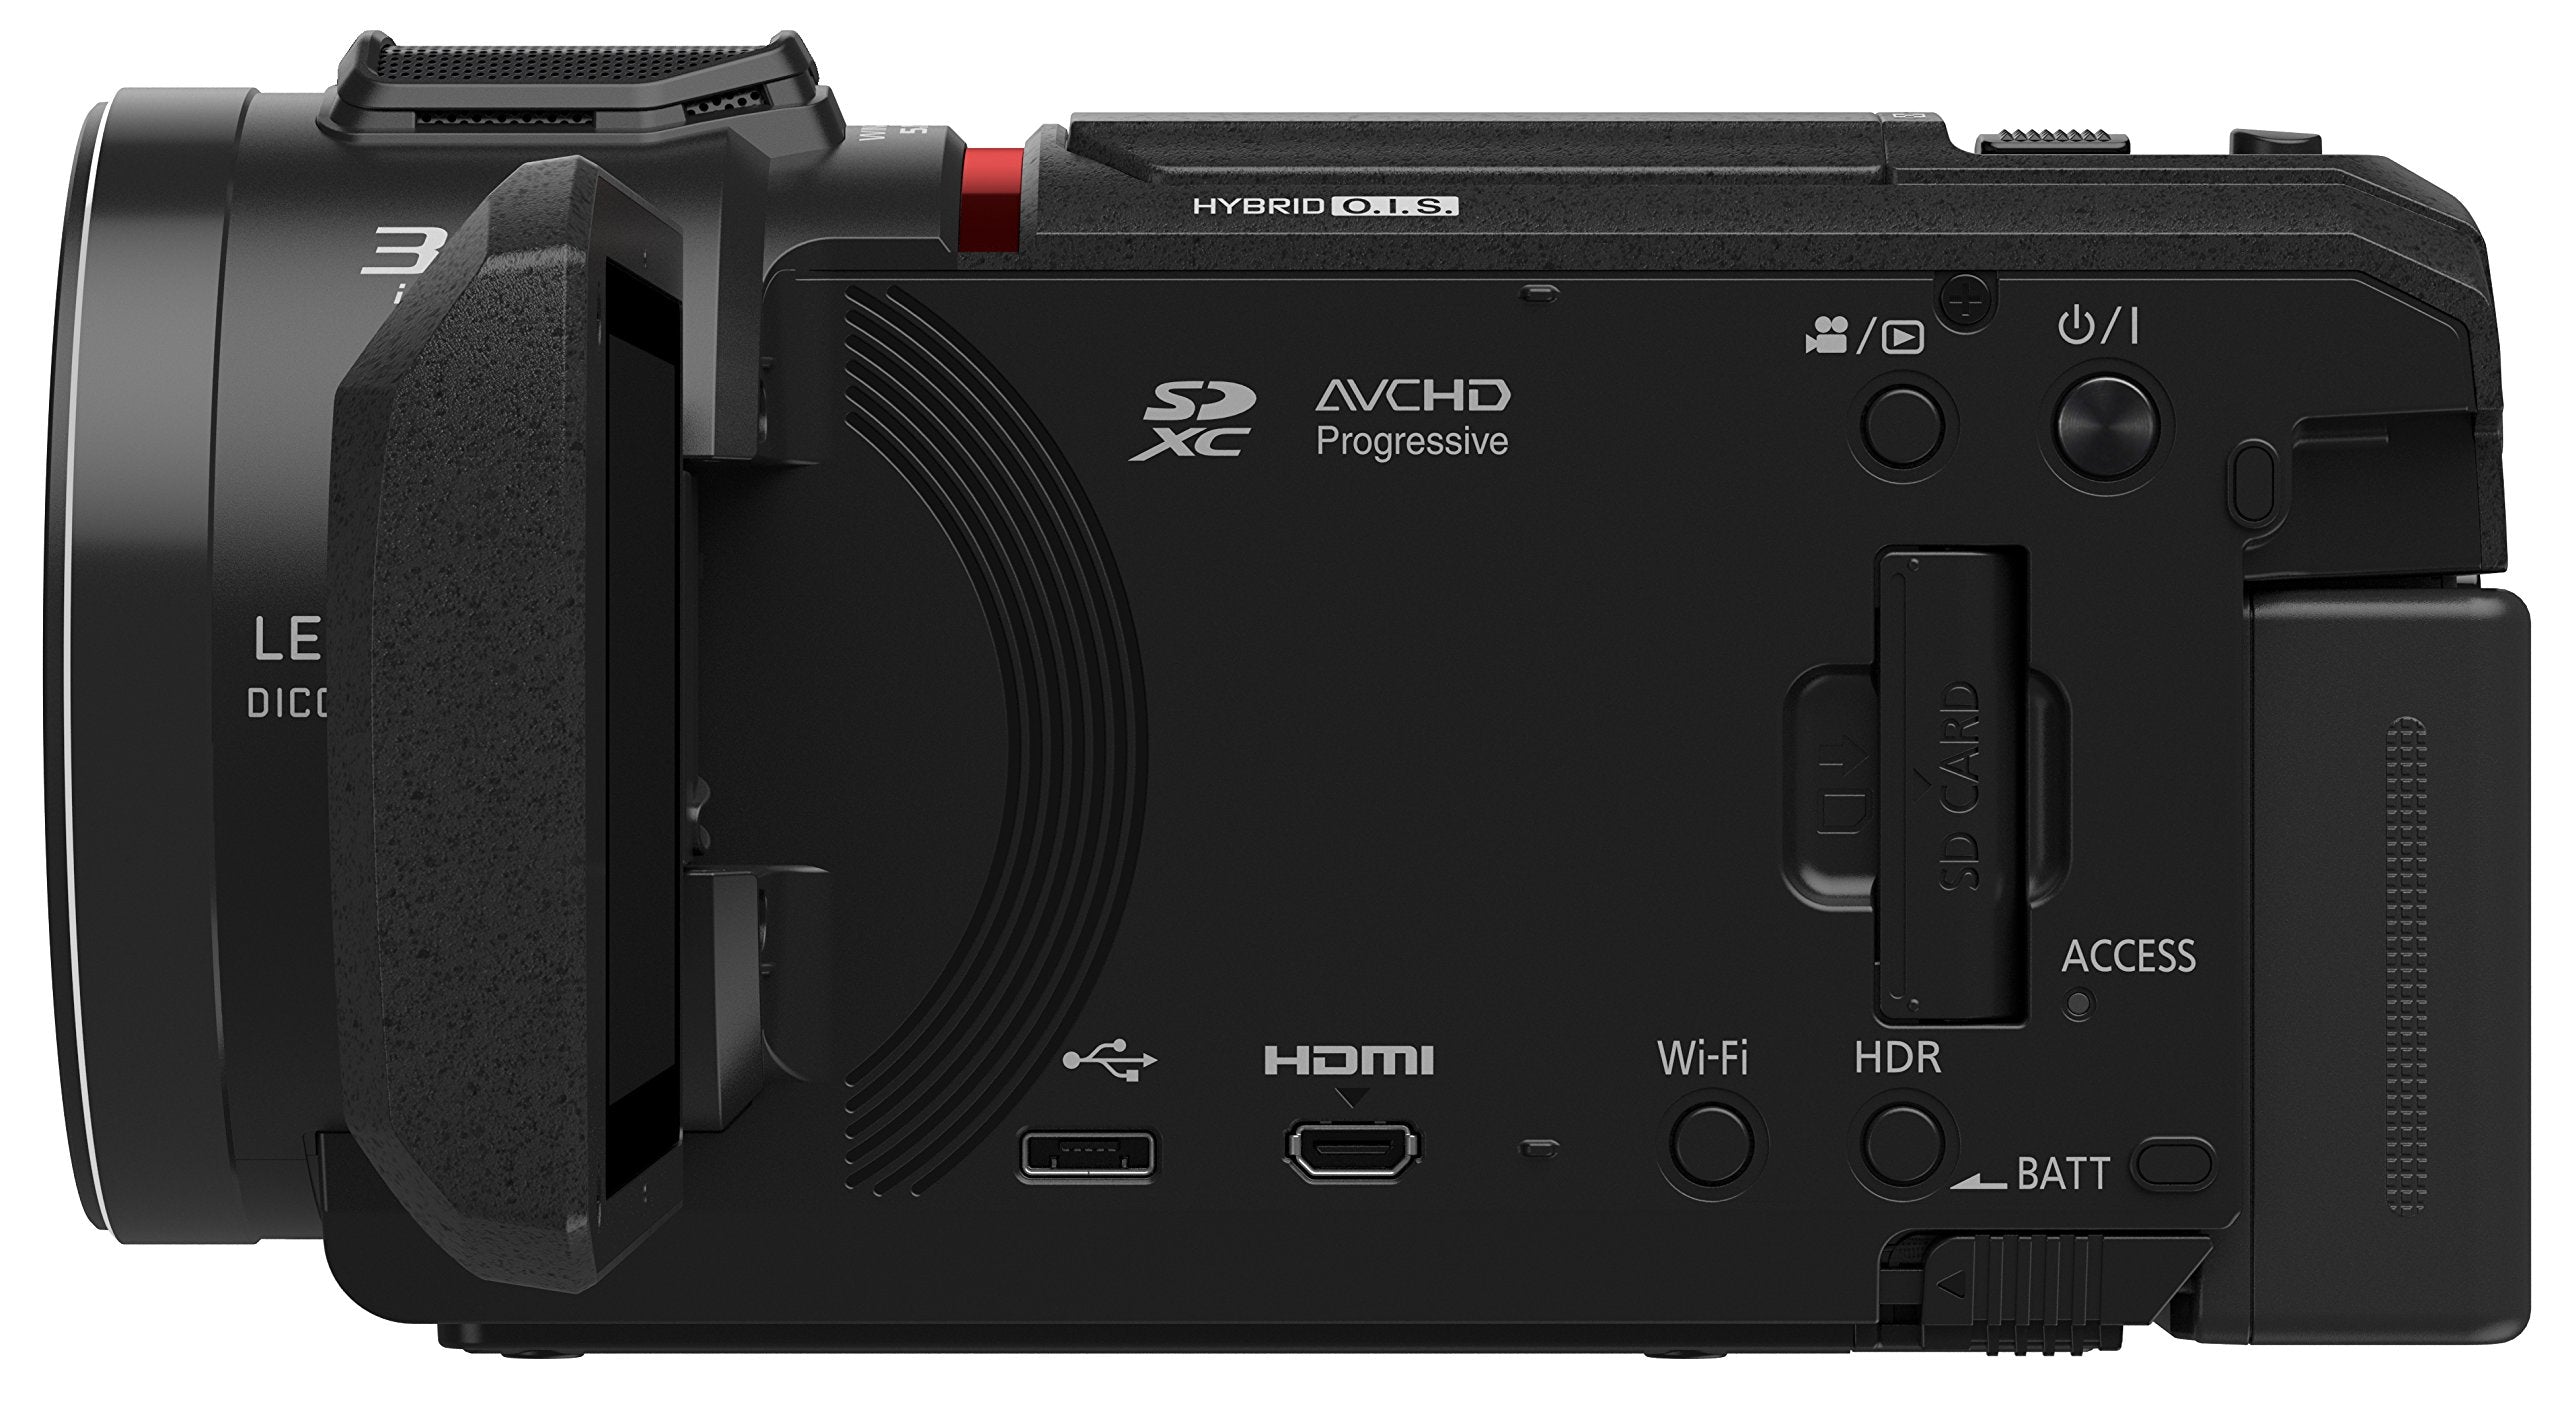 Panasonic HC-VX1 4K HD Camcorder